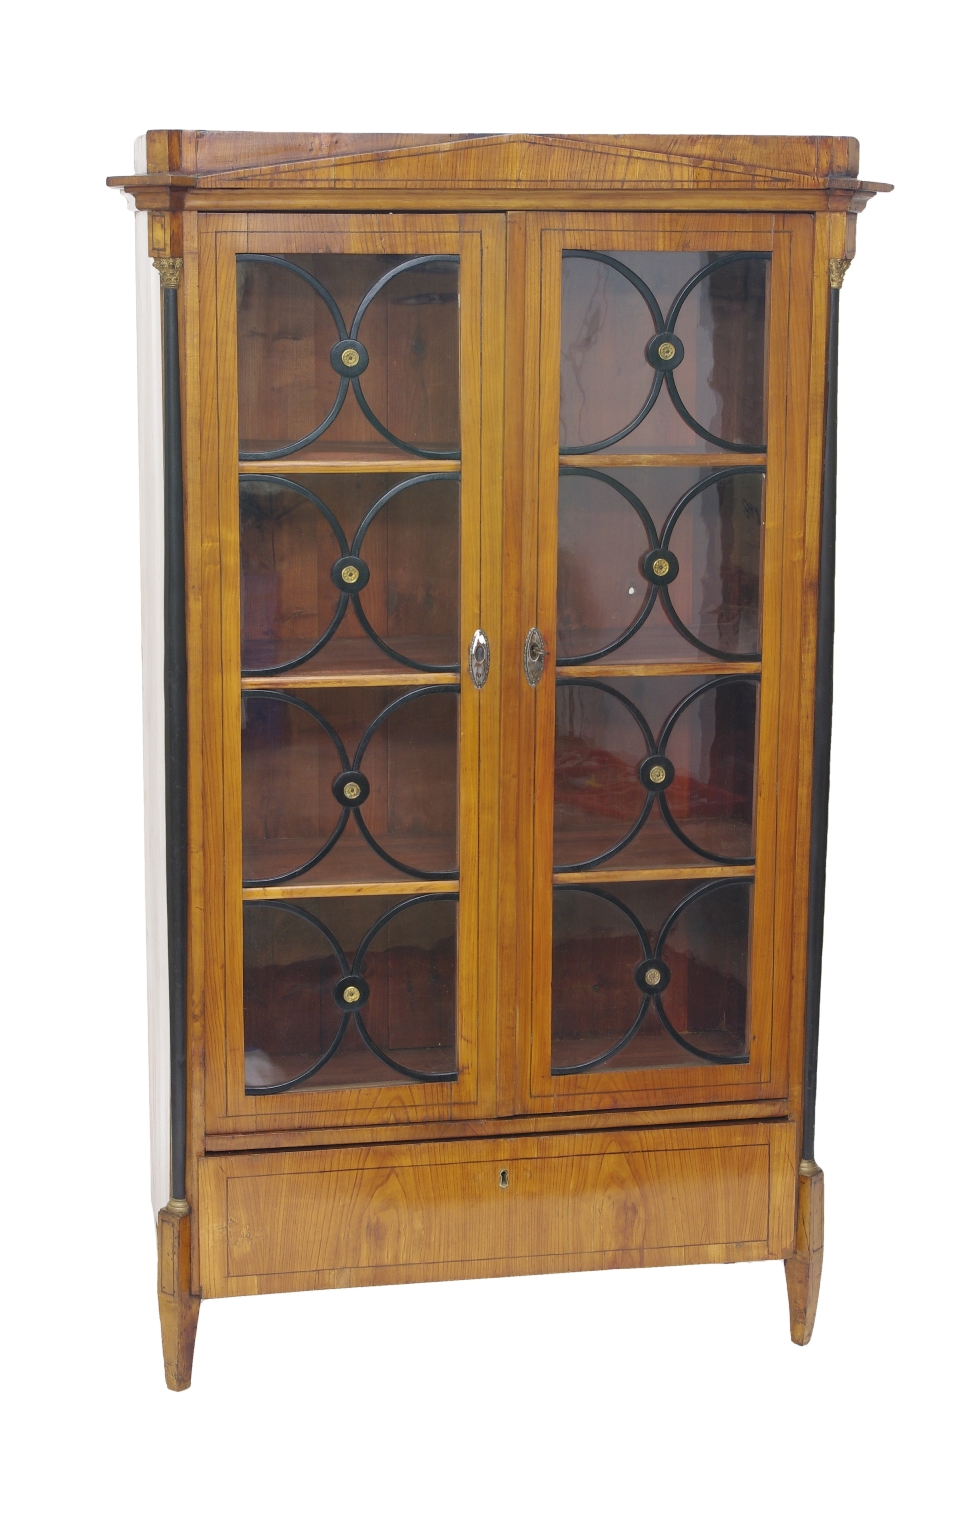 Biedermeier Cherry Bookcase, c. 1820